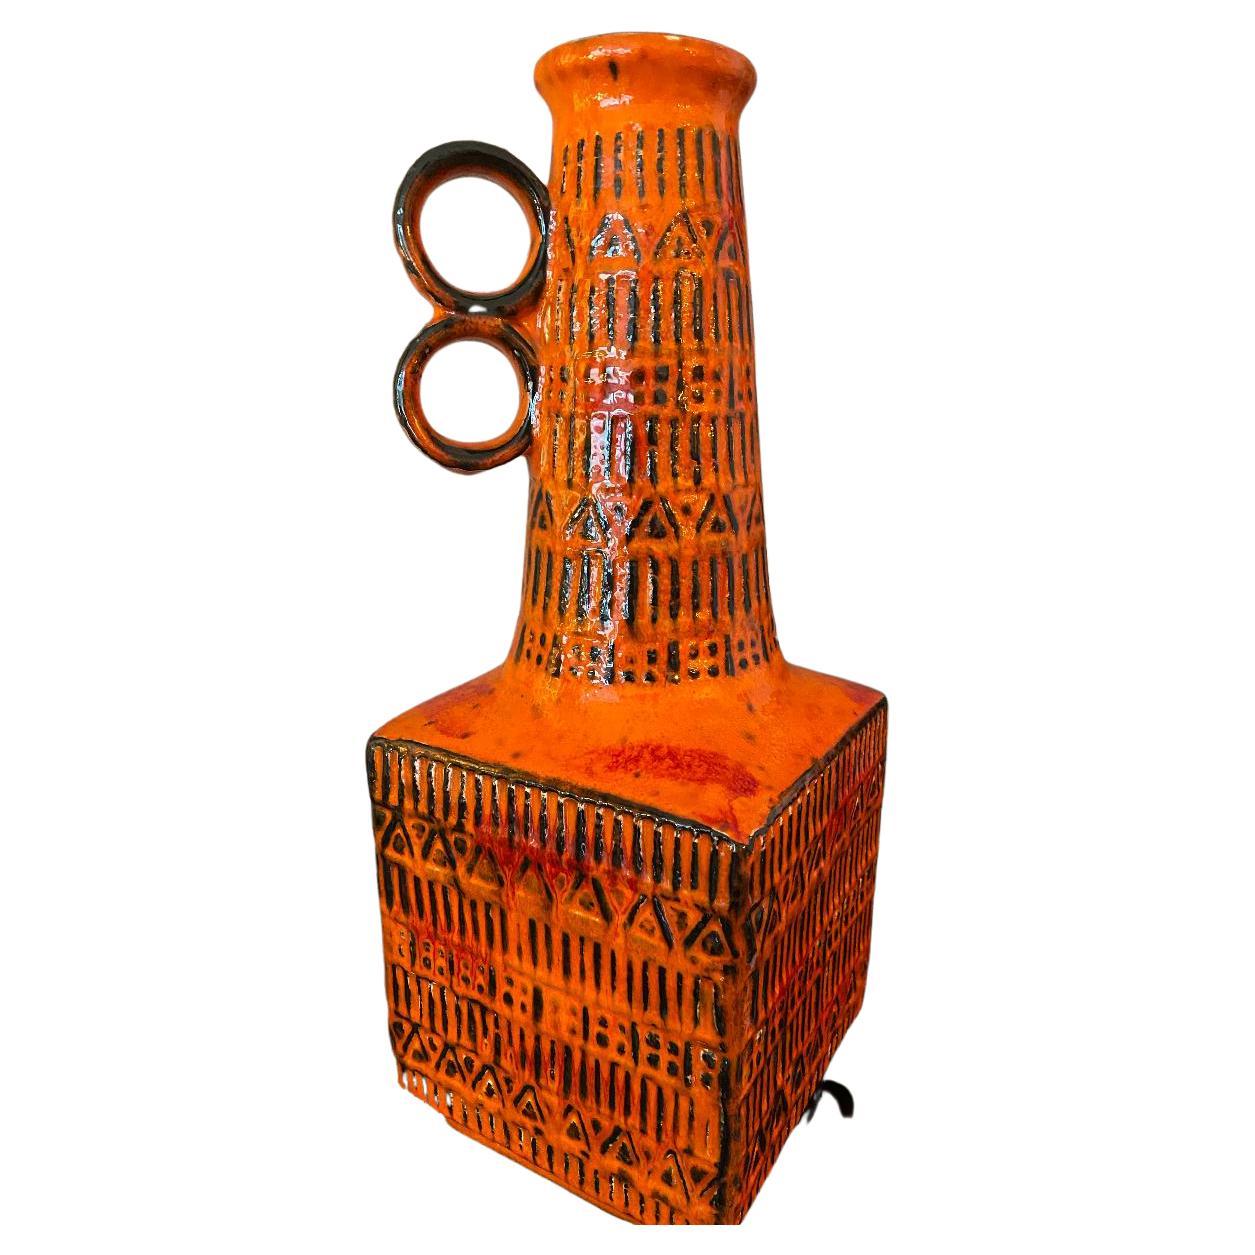 Bay Keramik Bodo Mans Vase aus der Jahrhundertmitte